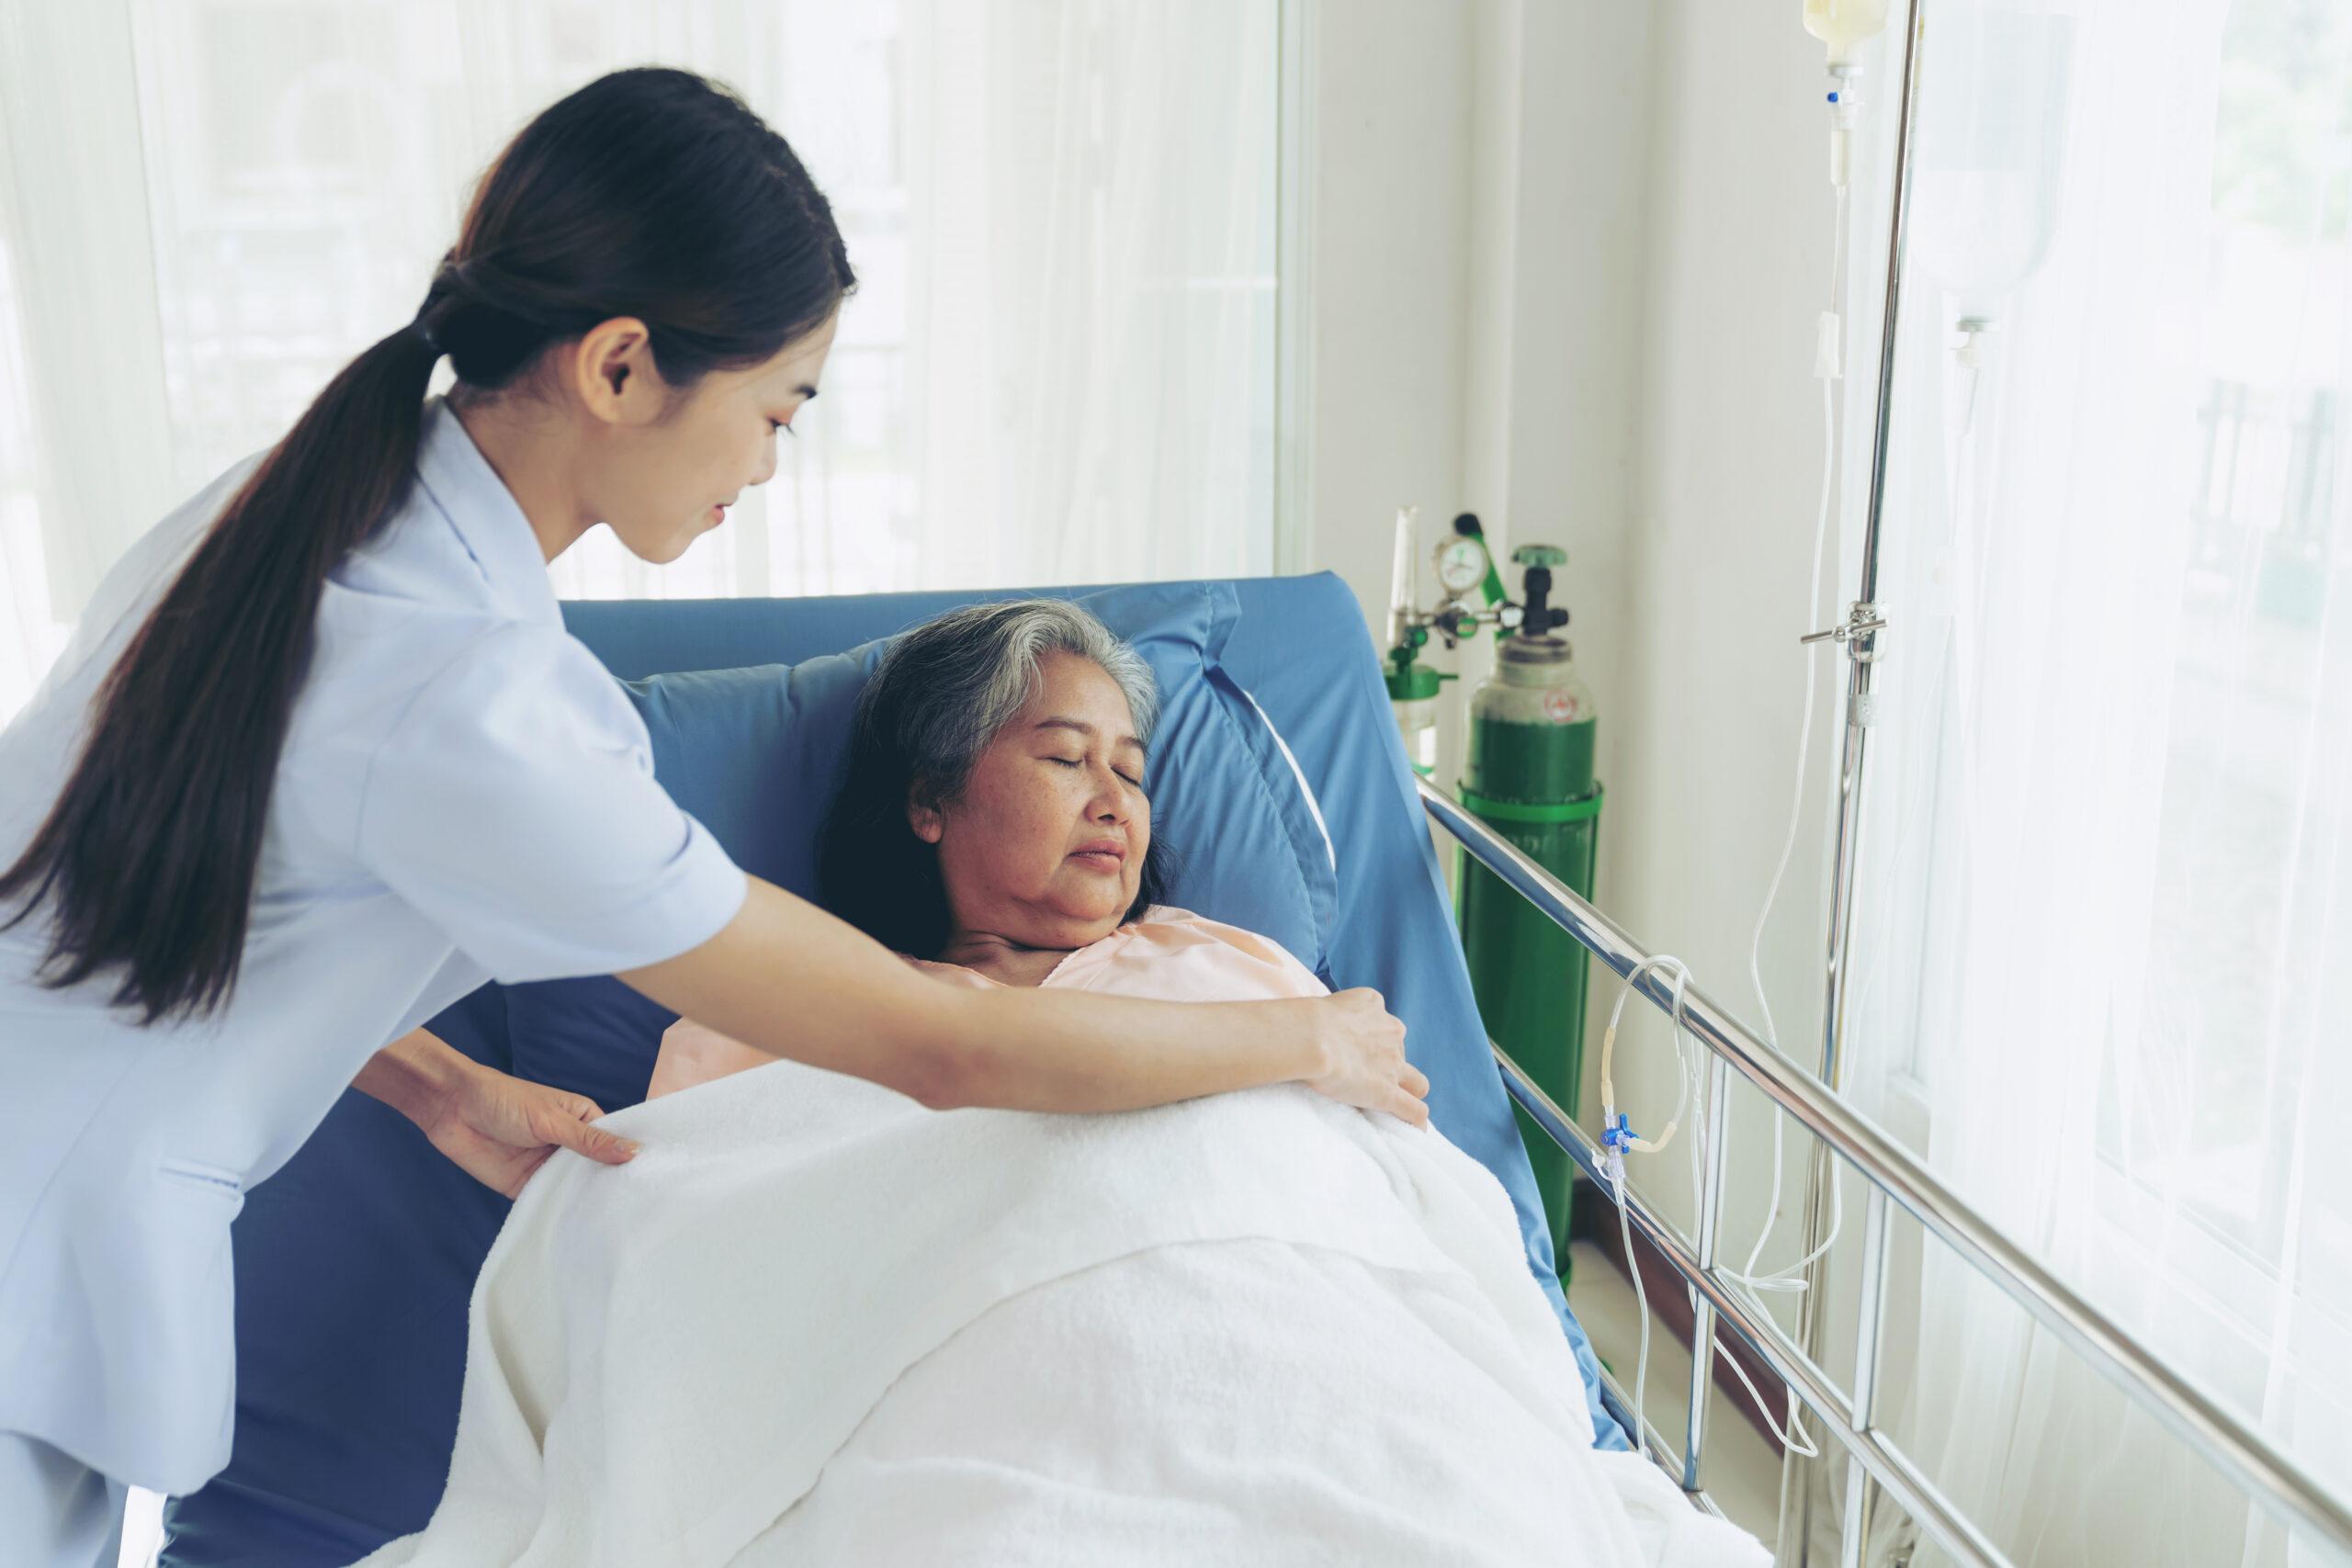 Pain Management in Unresponsiveness in Hospice Patients